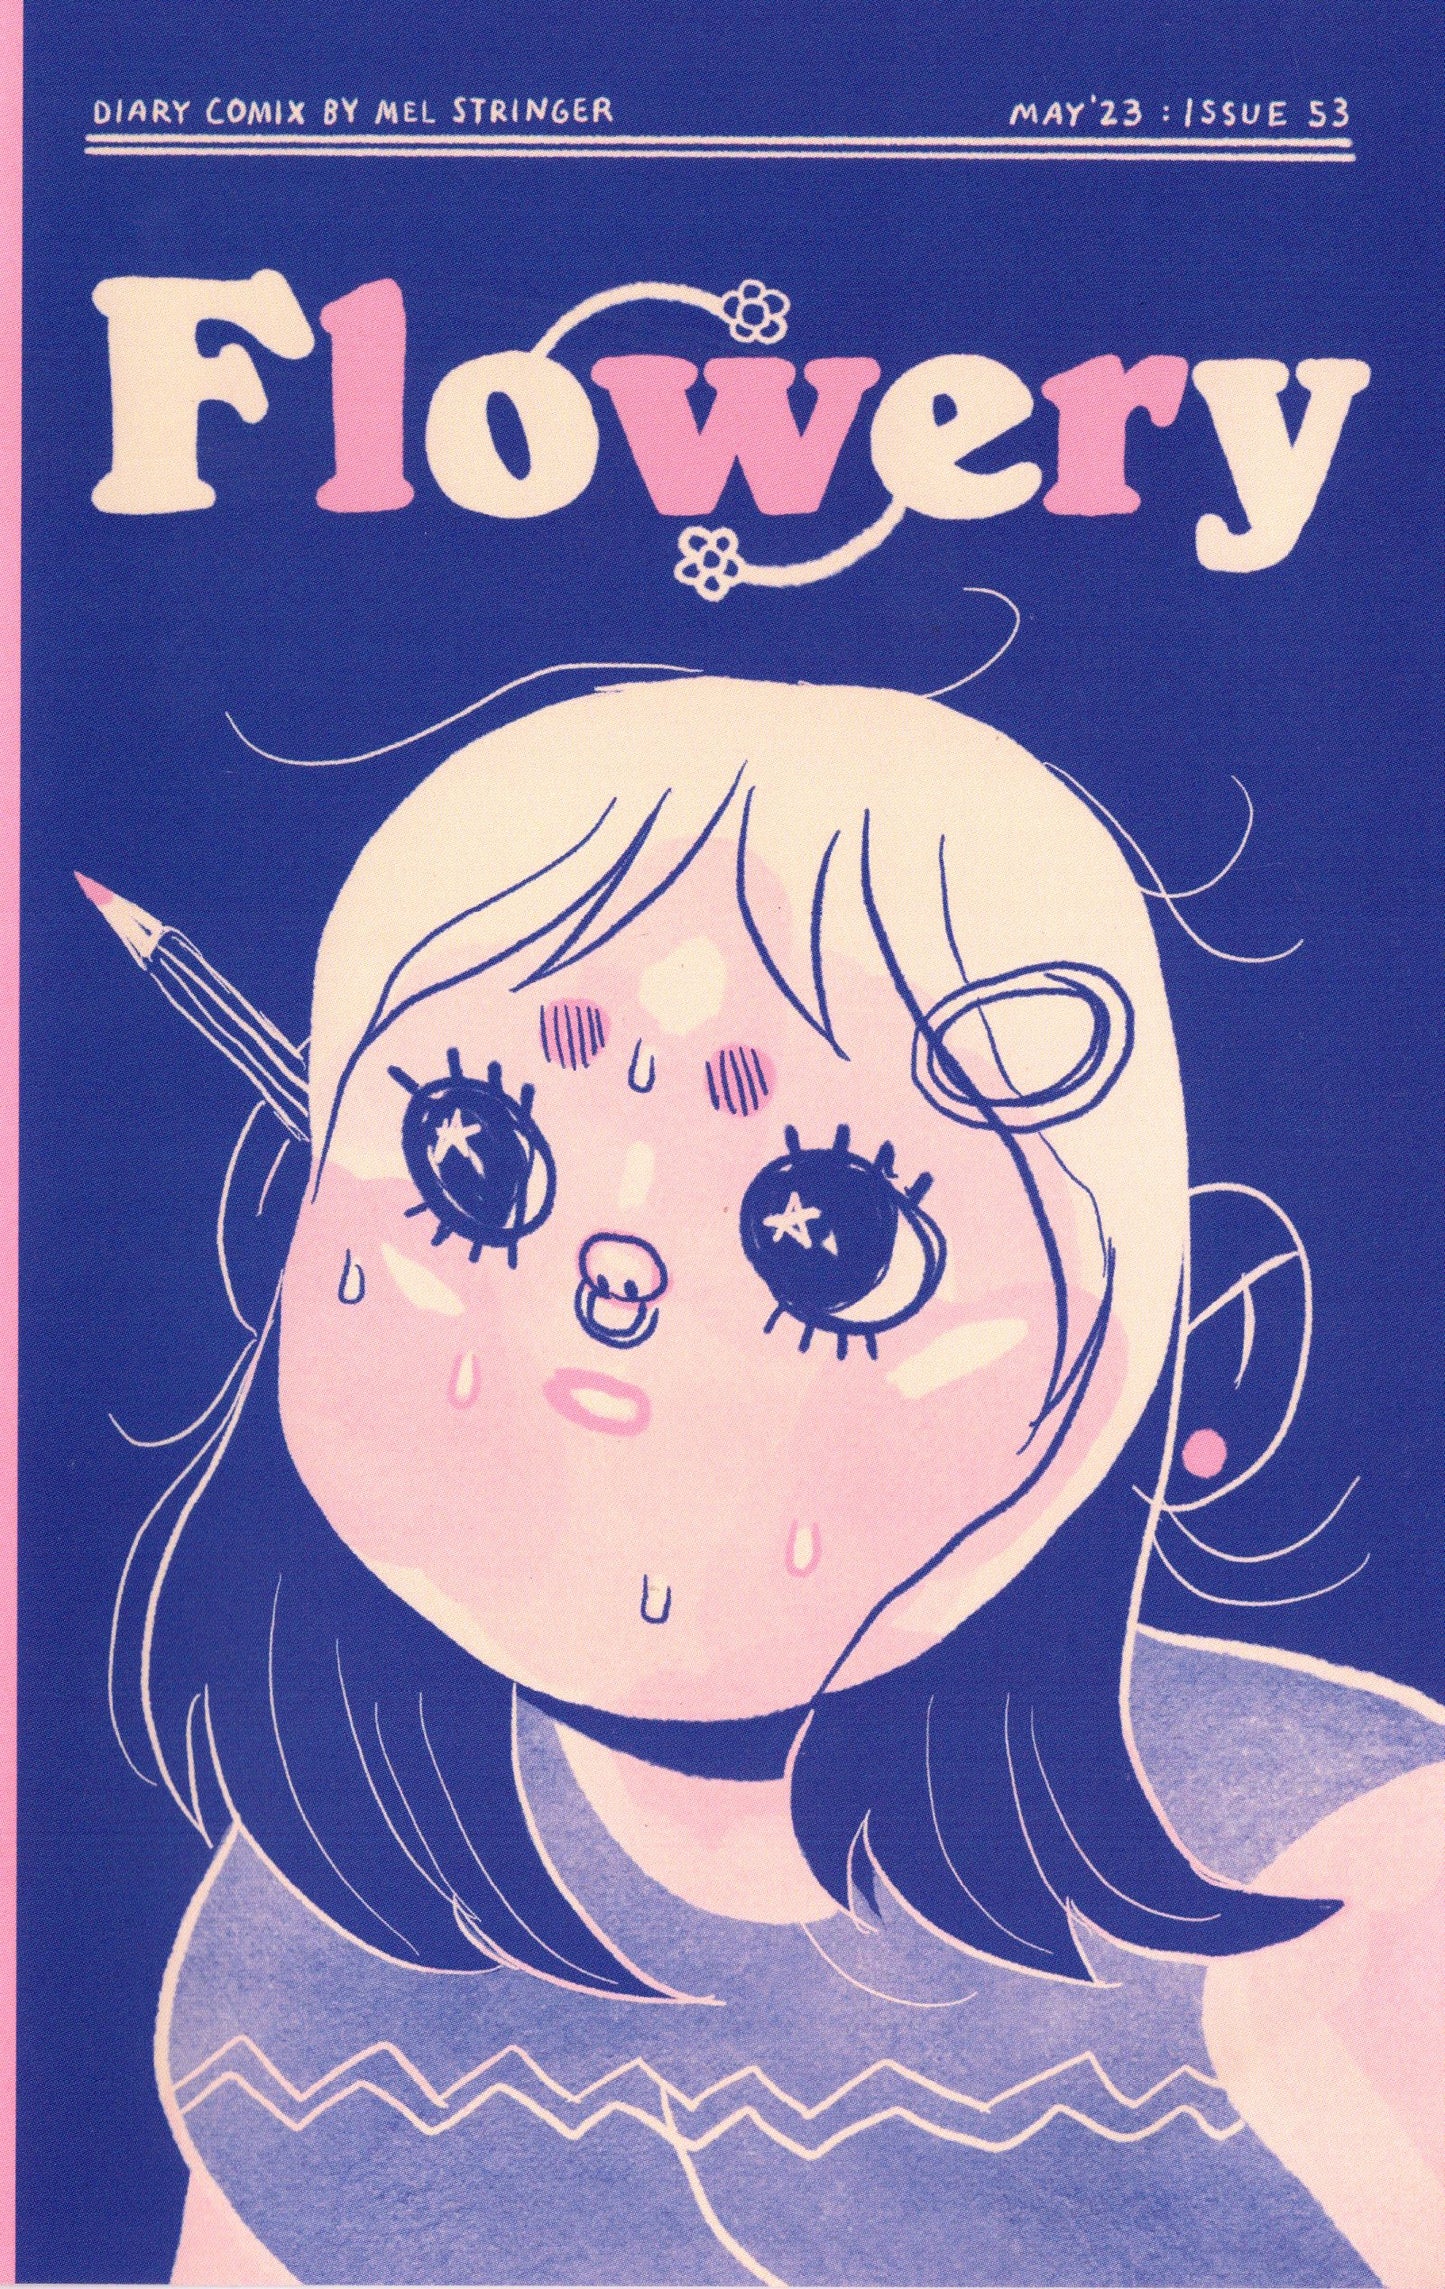 Flowery Zine #53 by Mel Stringer